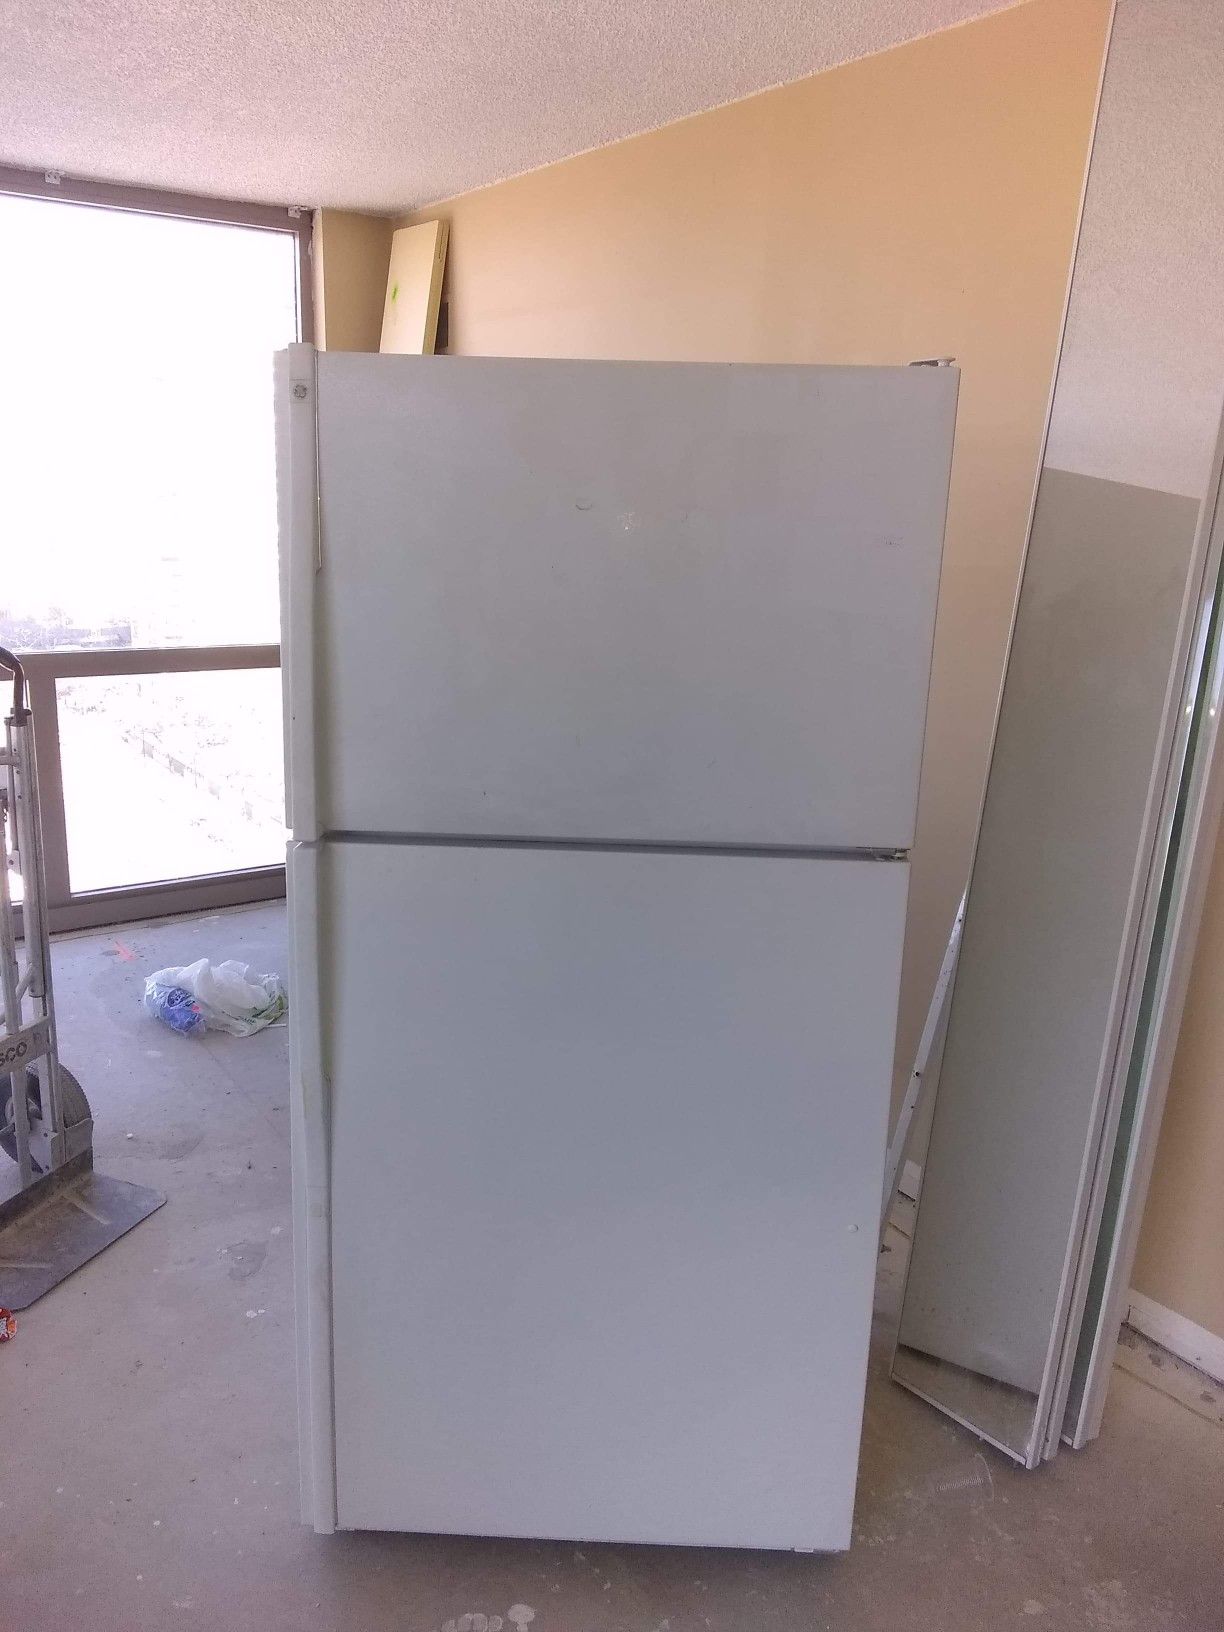 2 fridges